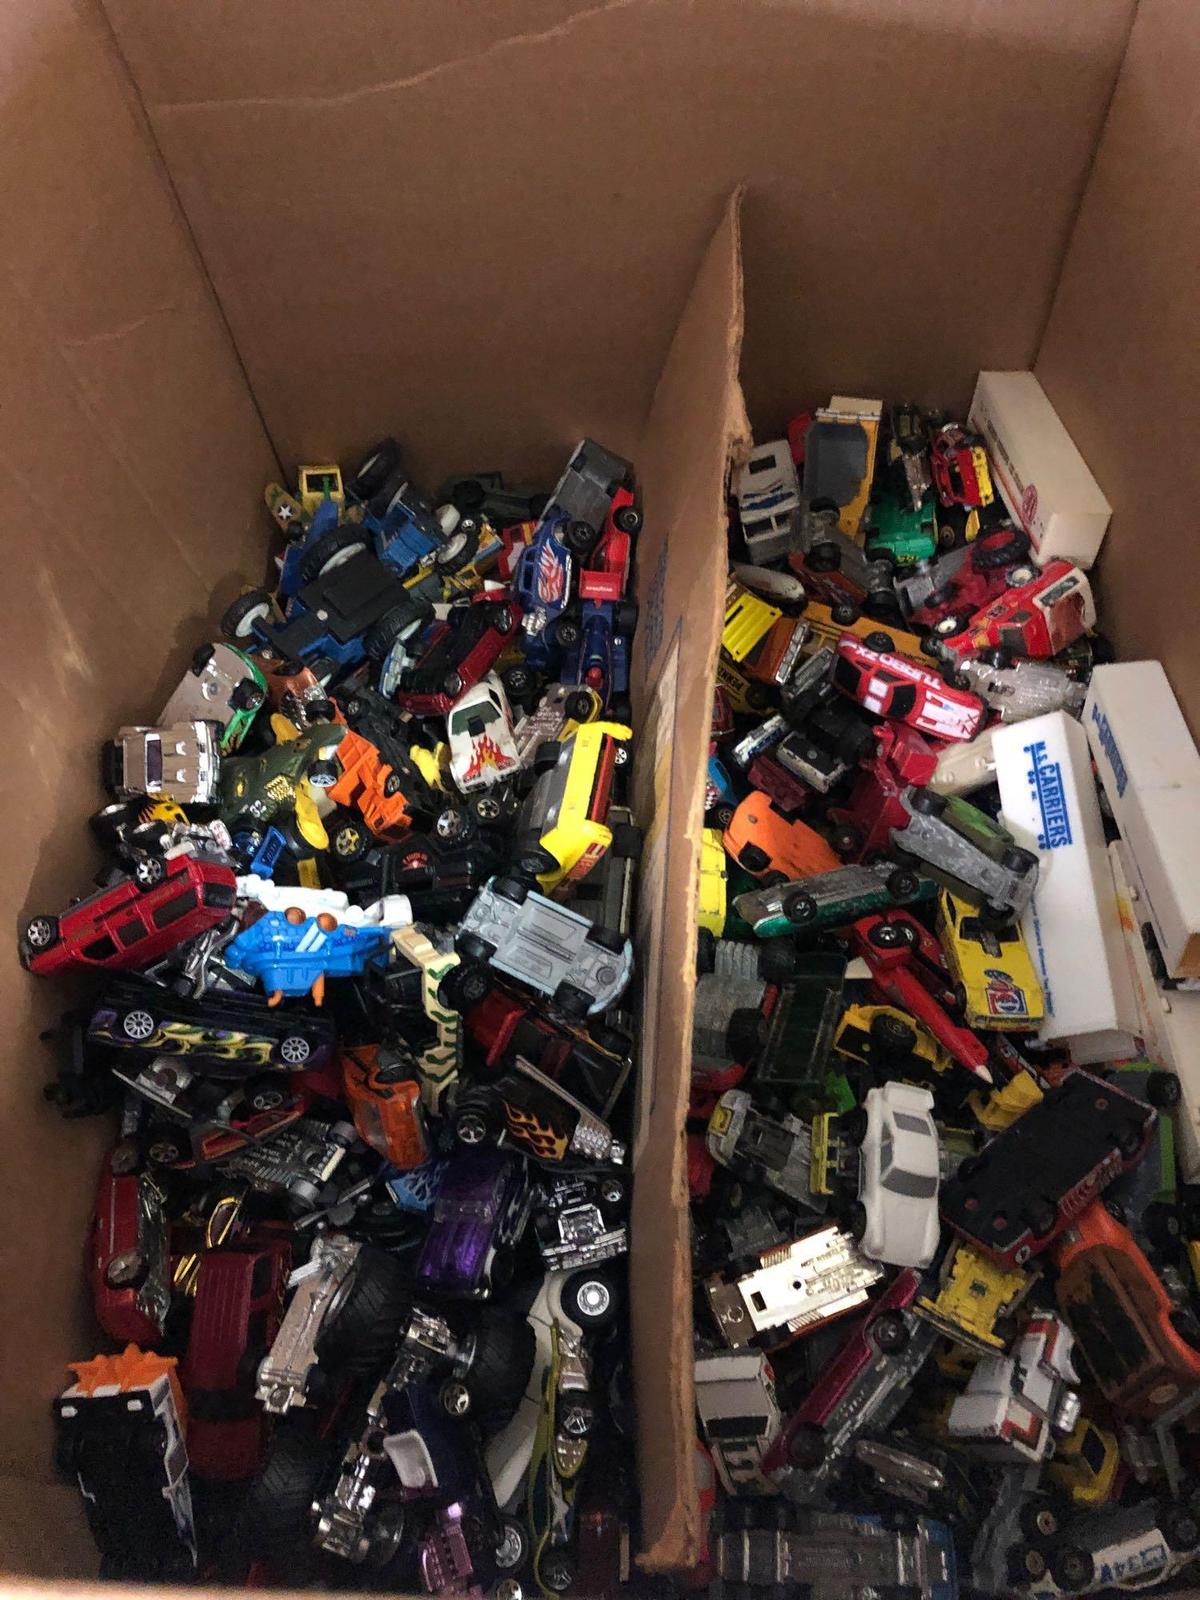 Numerous Die Cast Toy Cars